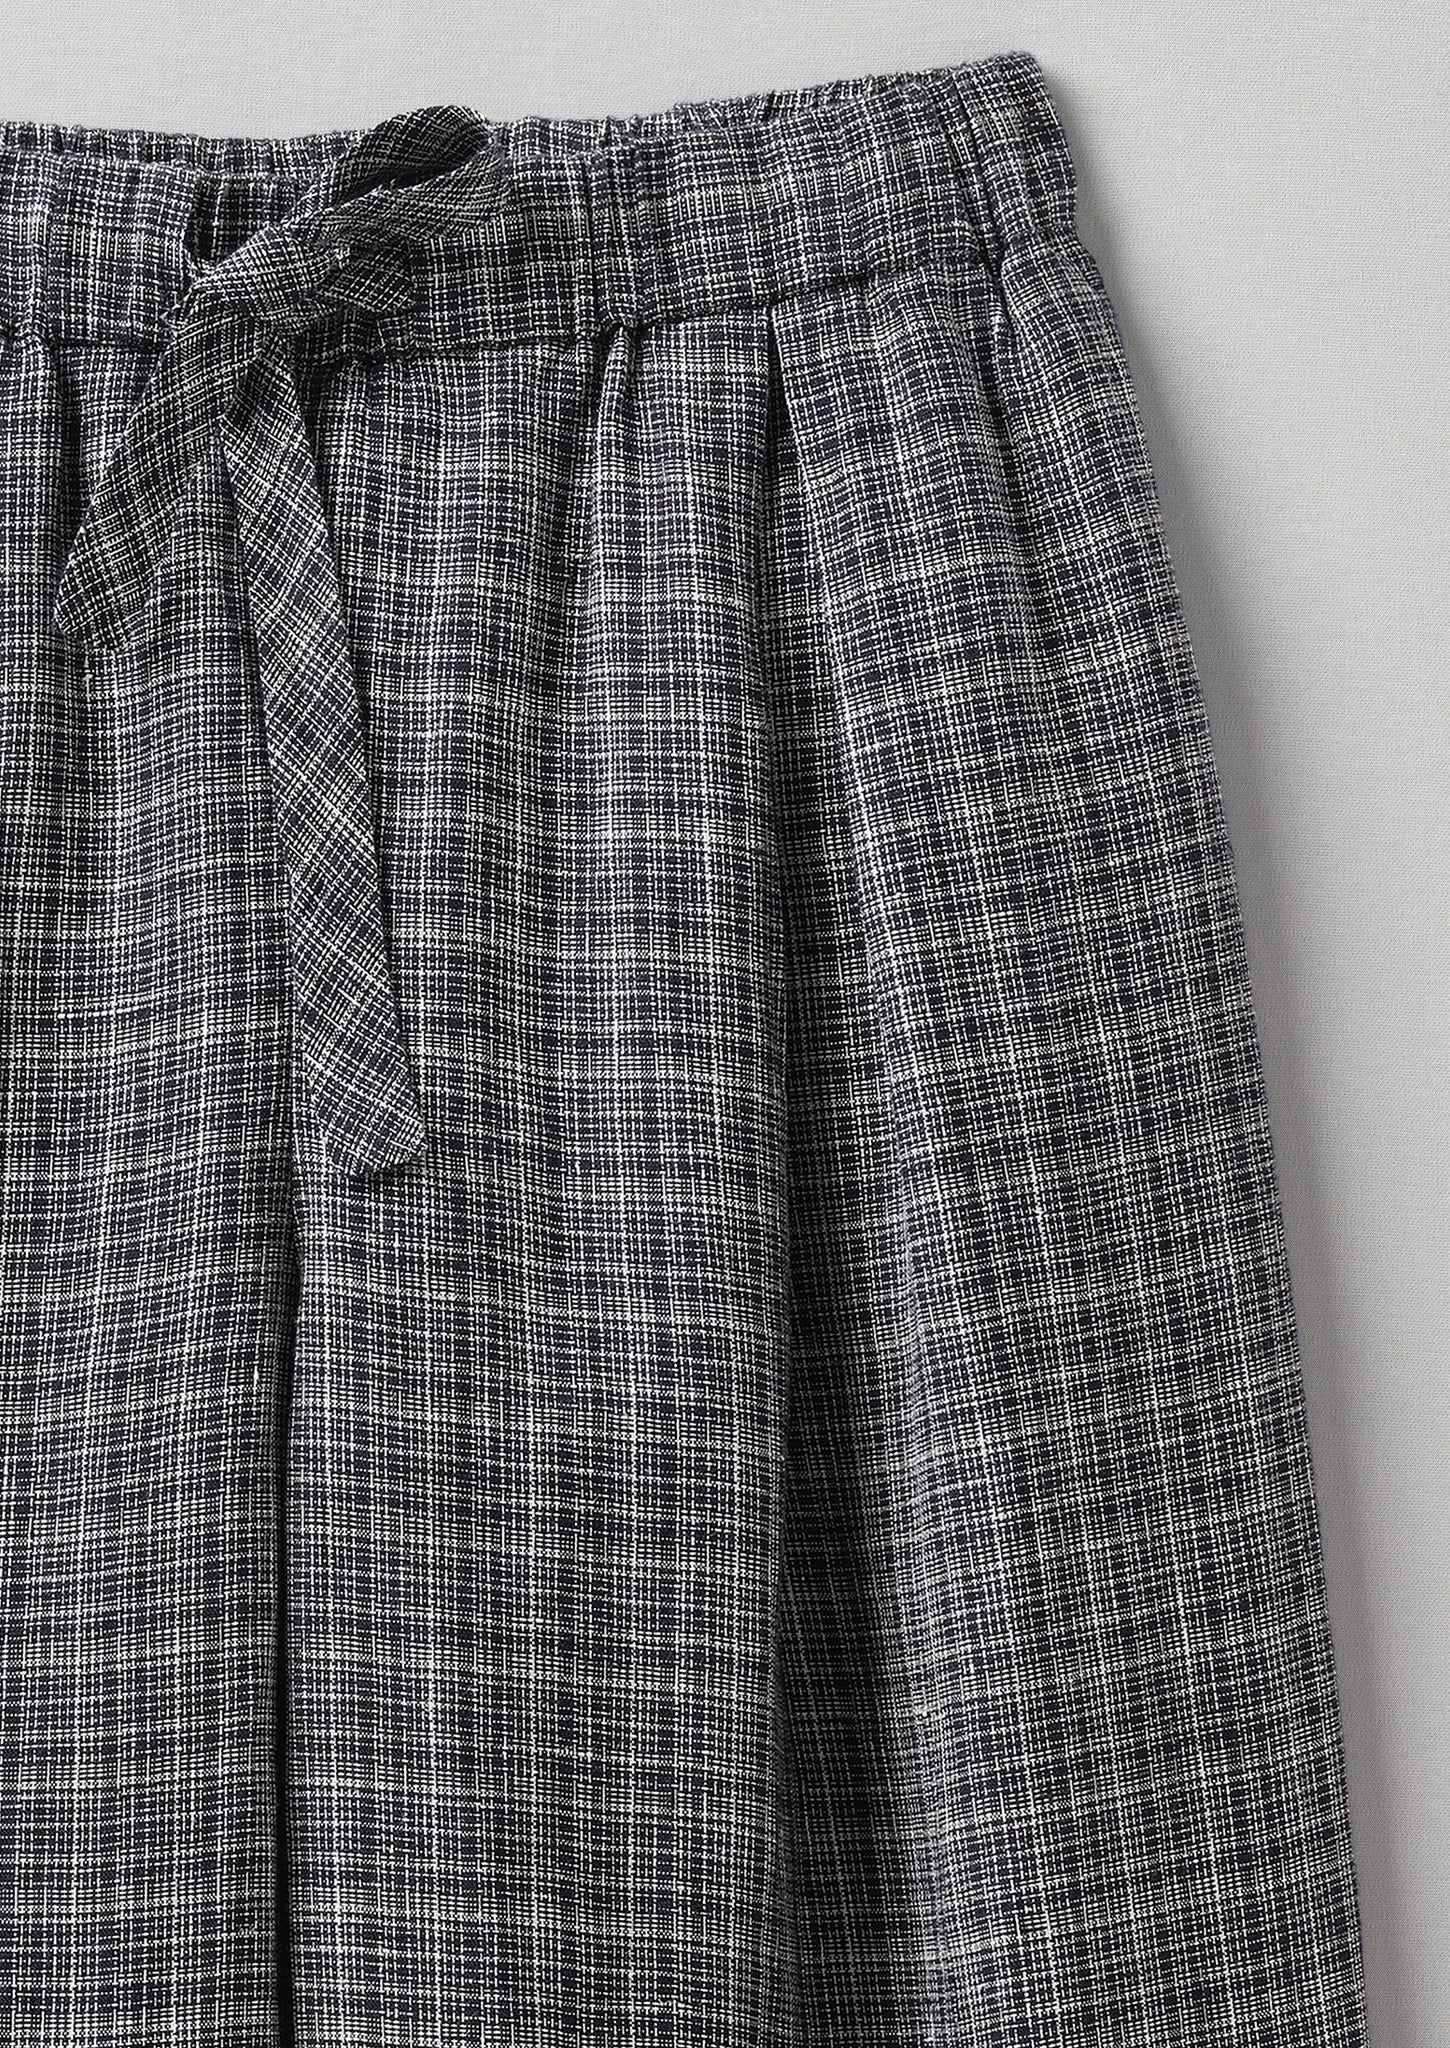 Minako Asawa Check Linen Pants | Charcoal